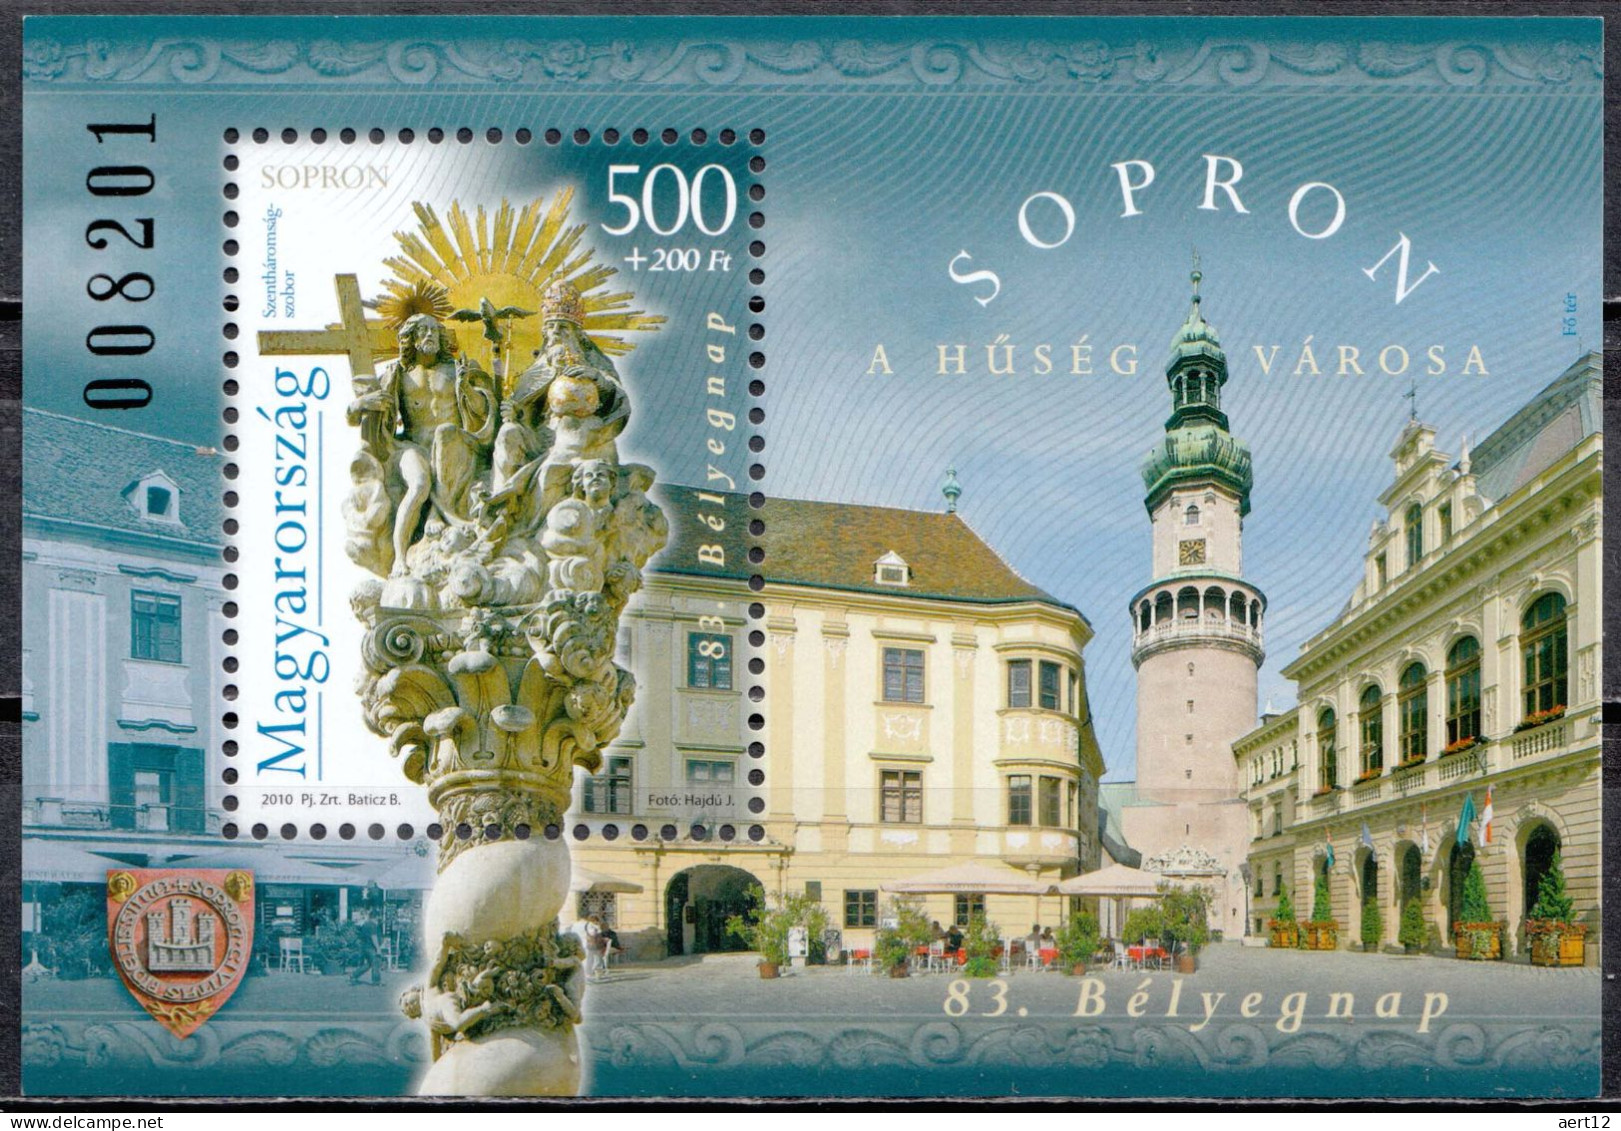 2010, Hungary, City Of Sopron, Architecture, Religion, Sculptures, Stamp Day, Souvenir Sheet, MNH(**), HU BL332 - Ongebruikt